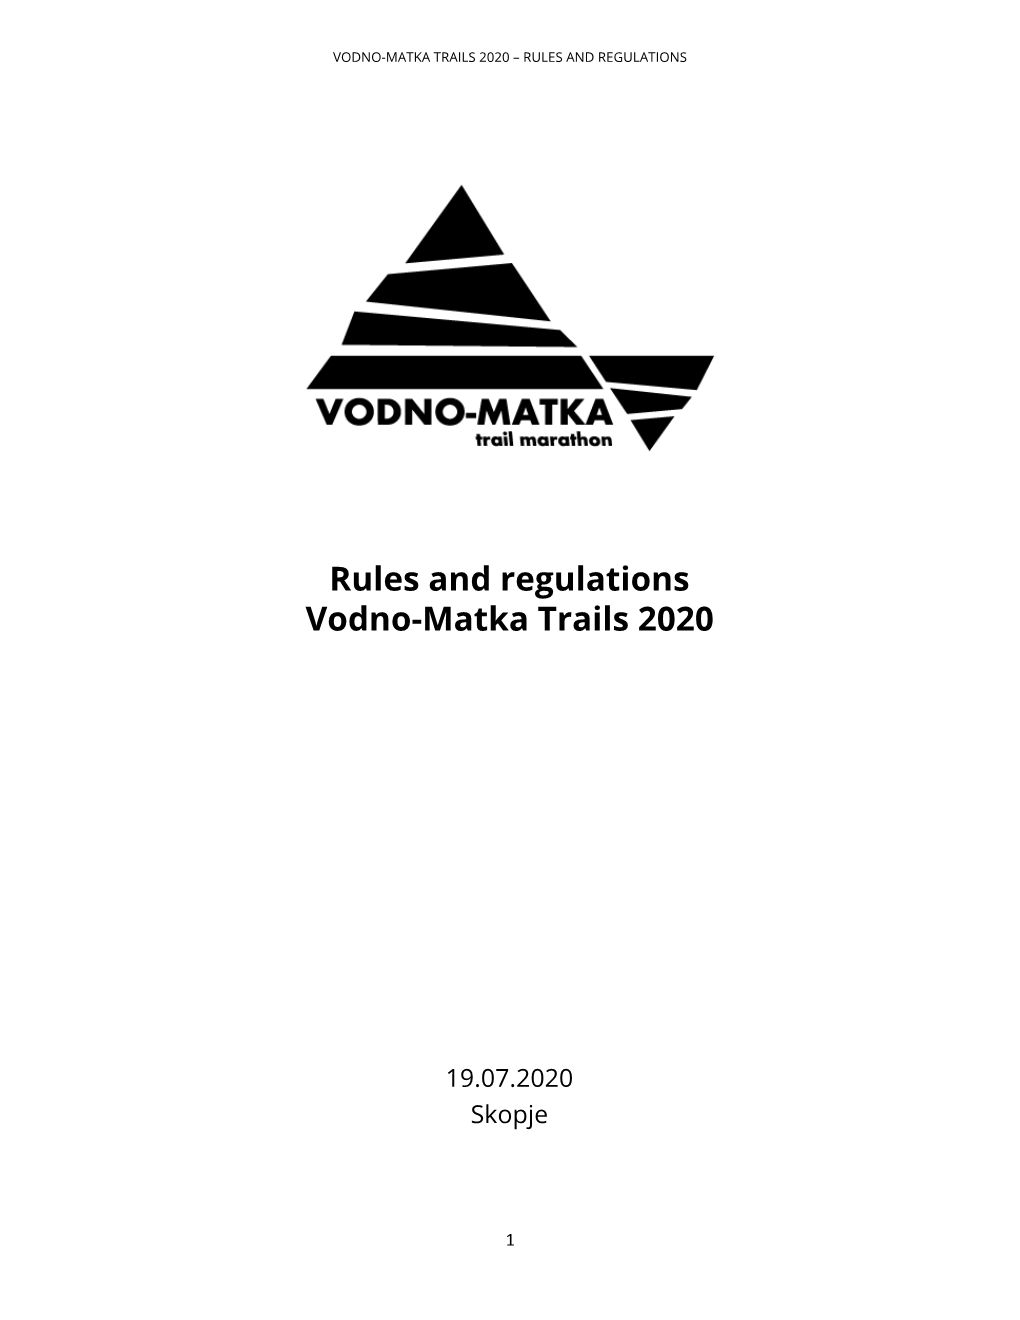 Rules and Regulations Vodno-Matka Trails 2020